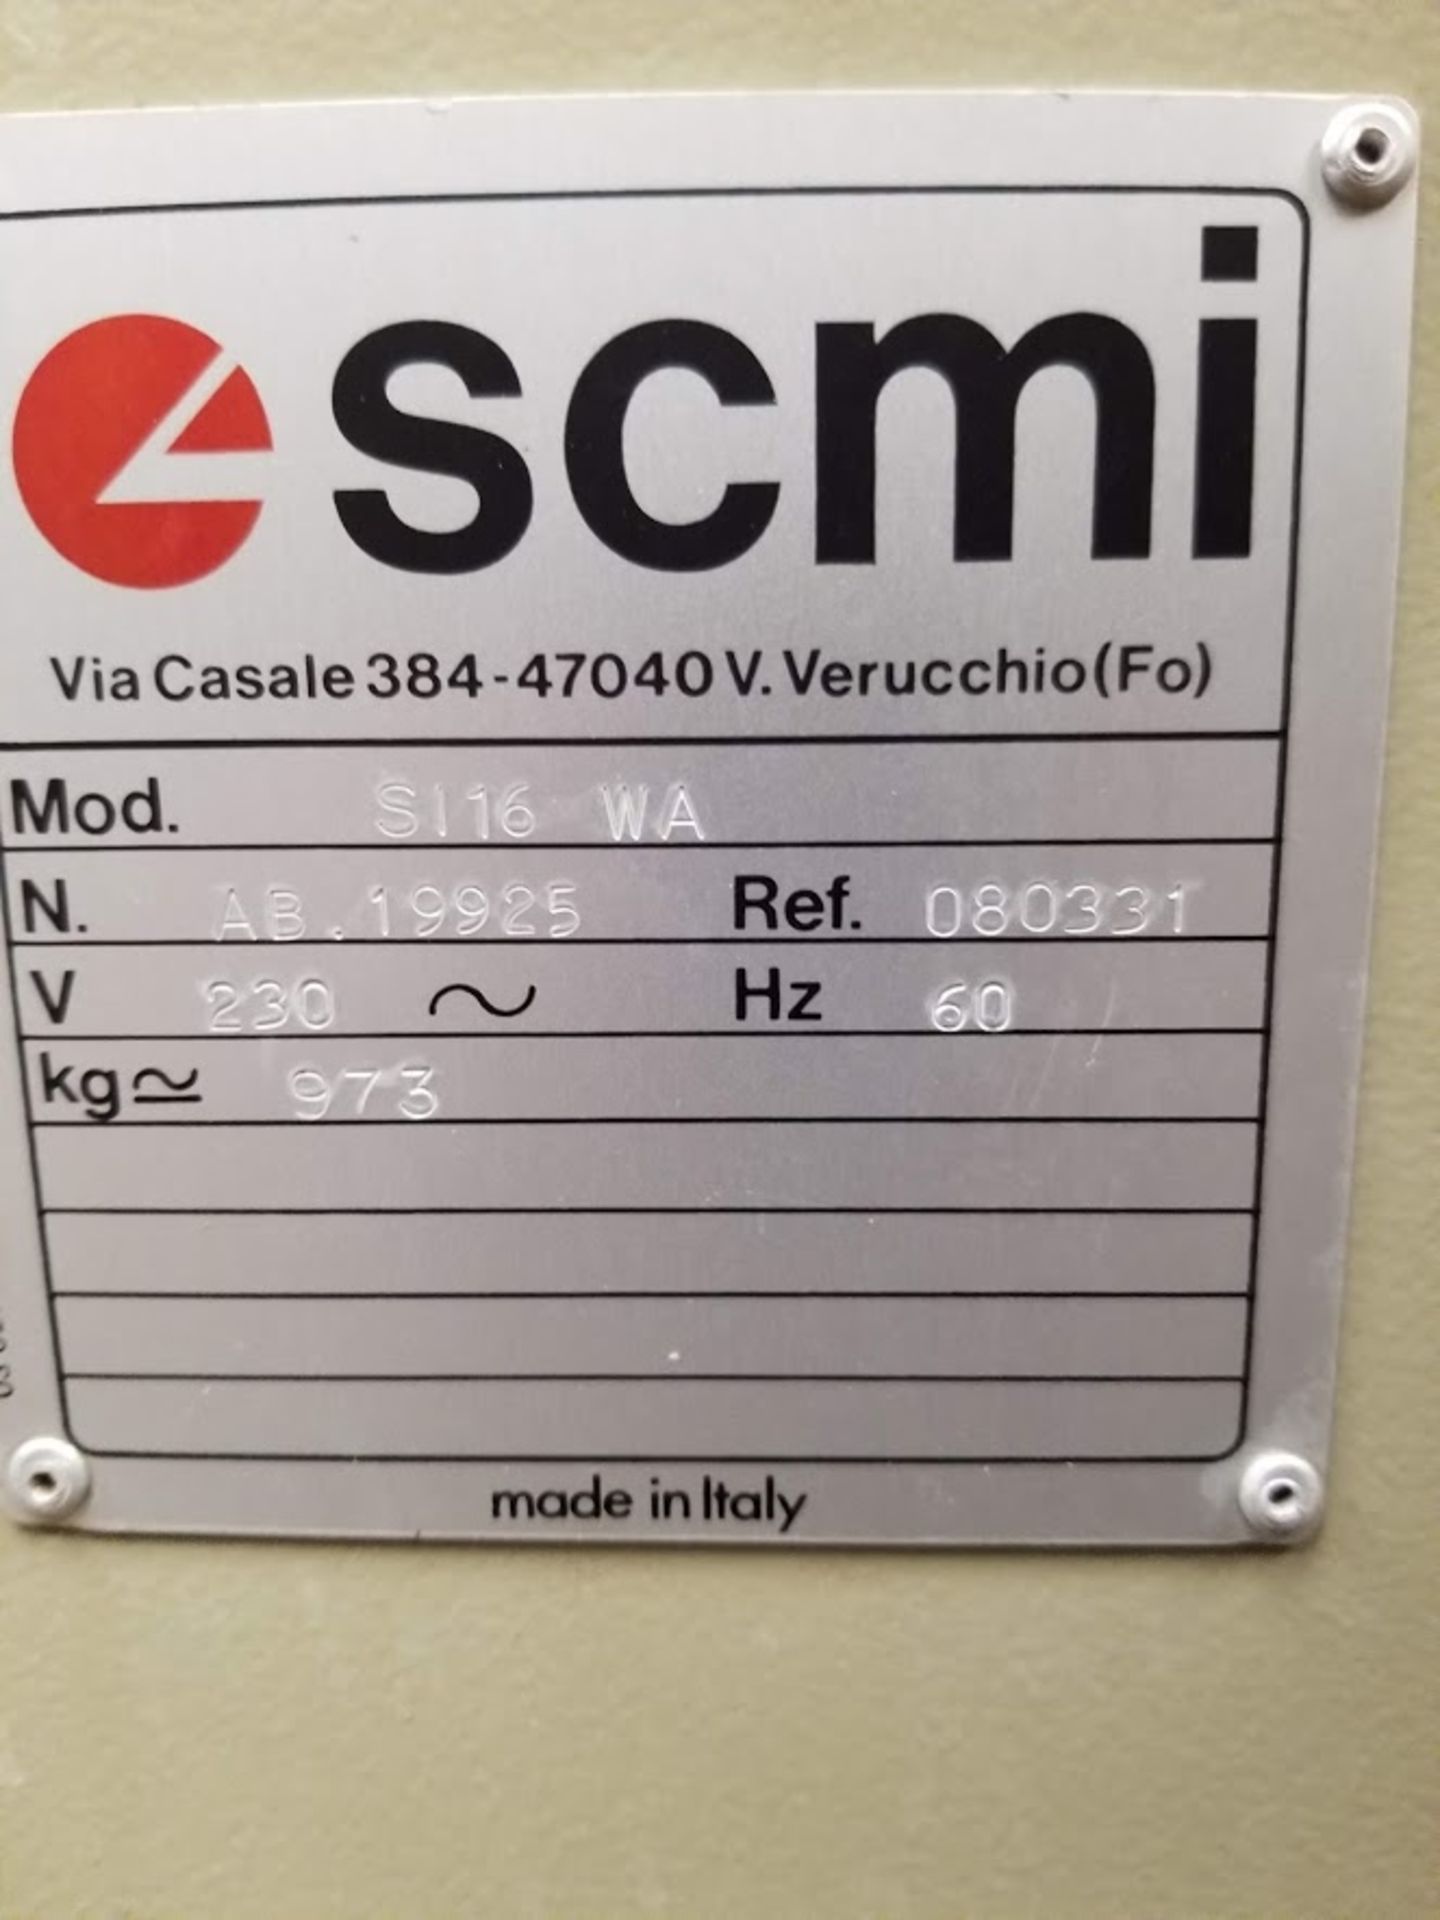 SCMi Sliding Table Saw w/ Scoring Unit, Model: SI16W 230V 3PH - Image 4 of 6